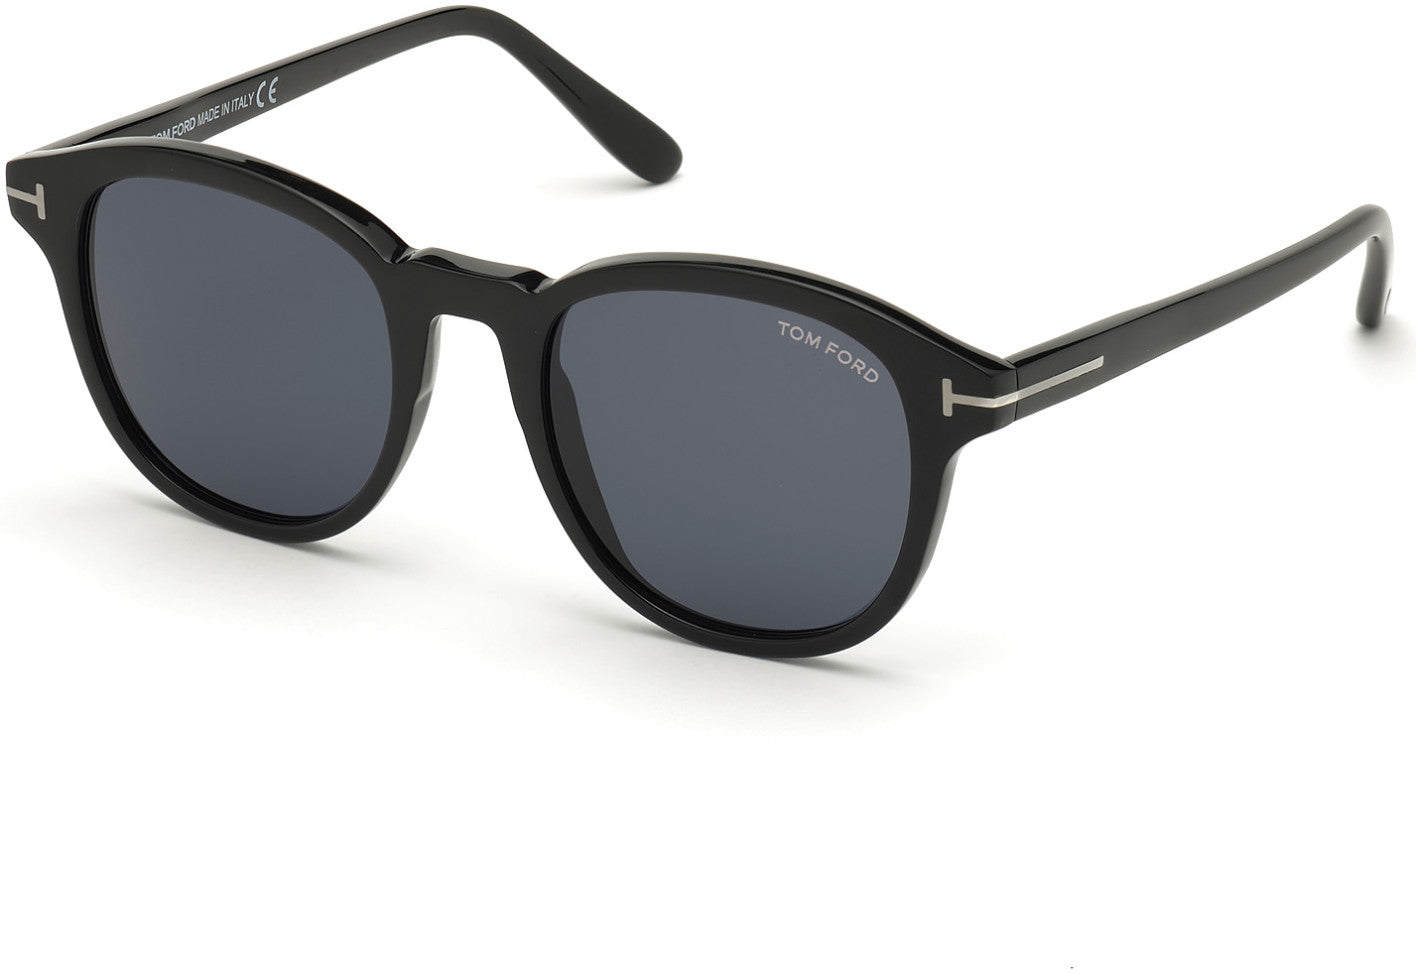 Tom Ford FT0752-N Round Sunglasses 01A-01A - Shiny Black/ Smoke Lenses/ Shiny Black "t" Temple Detail